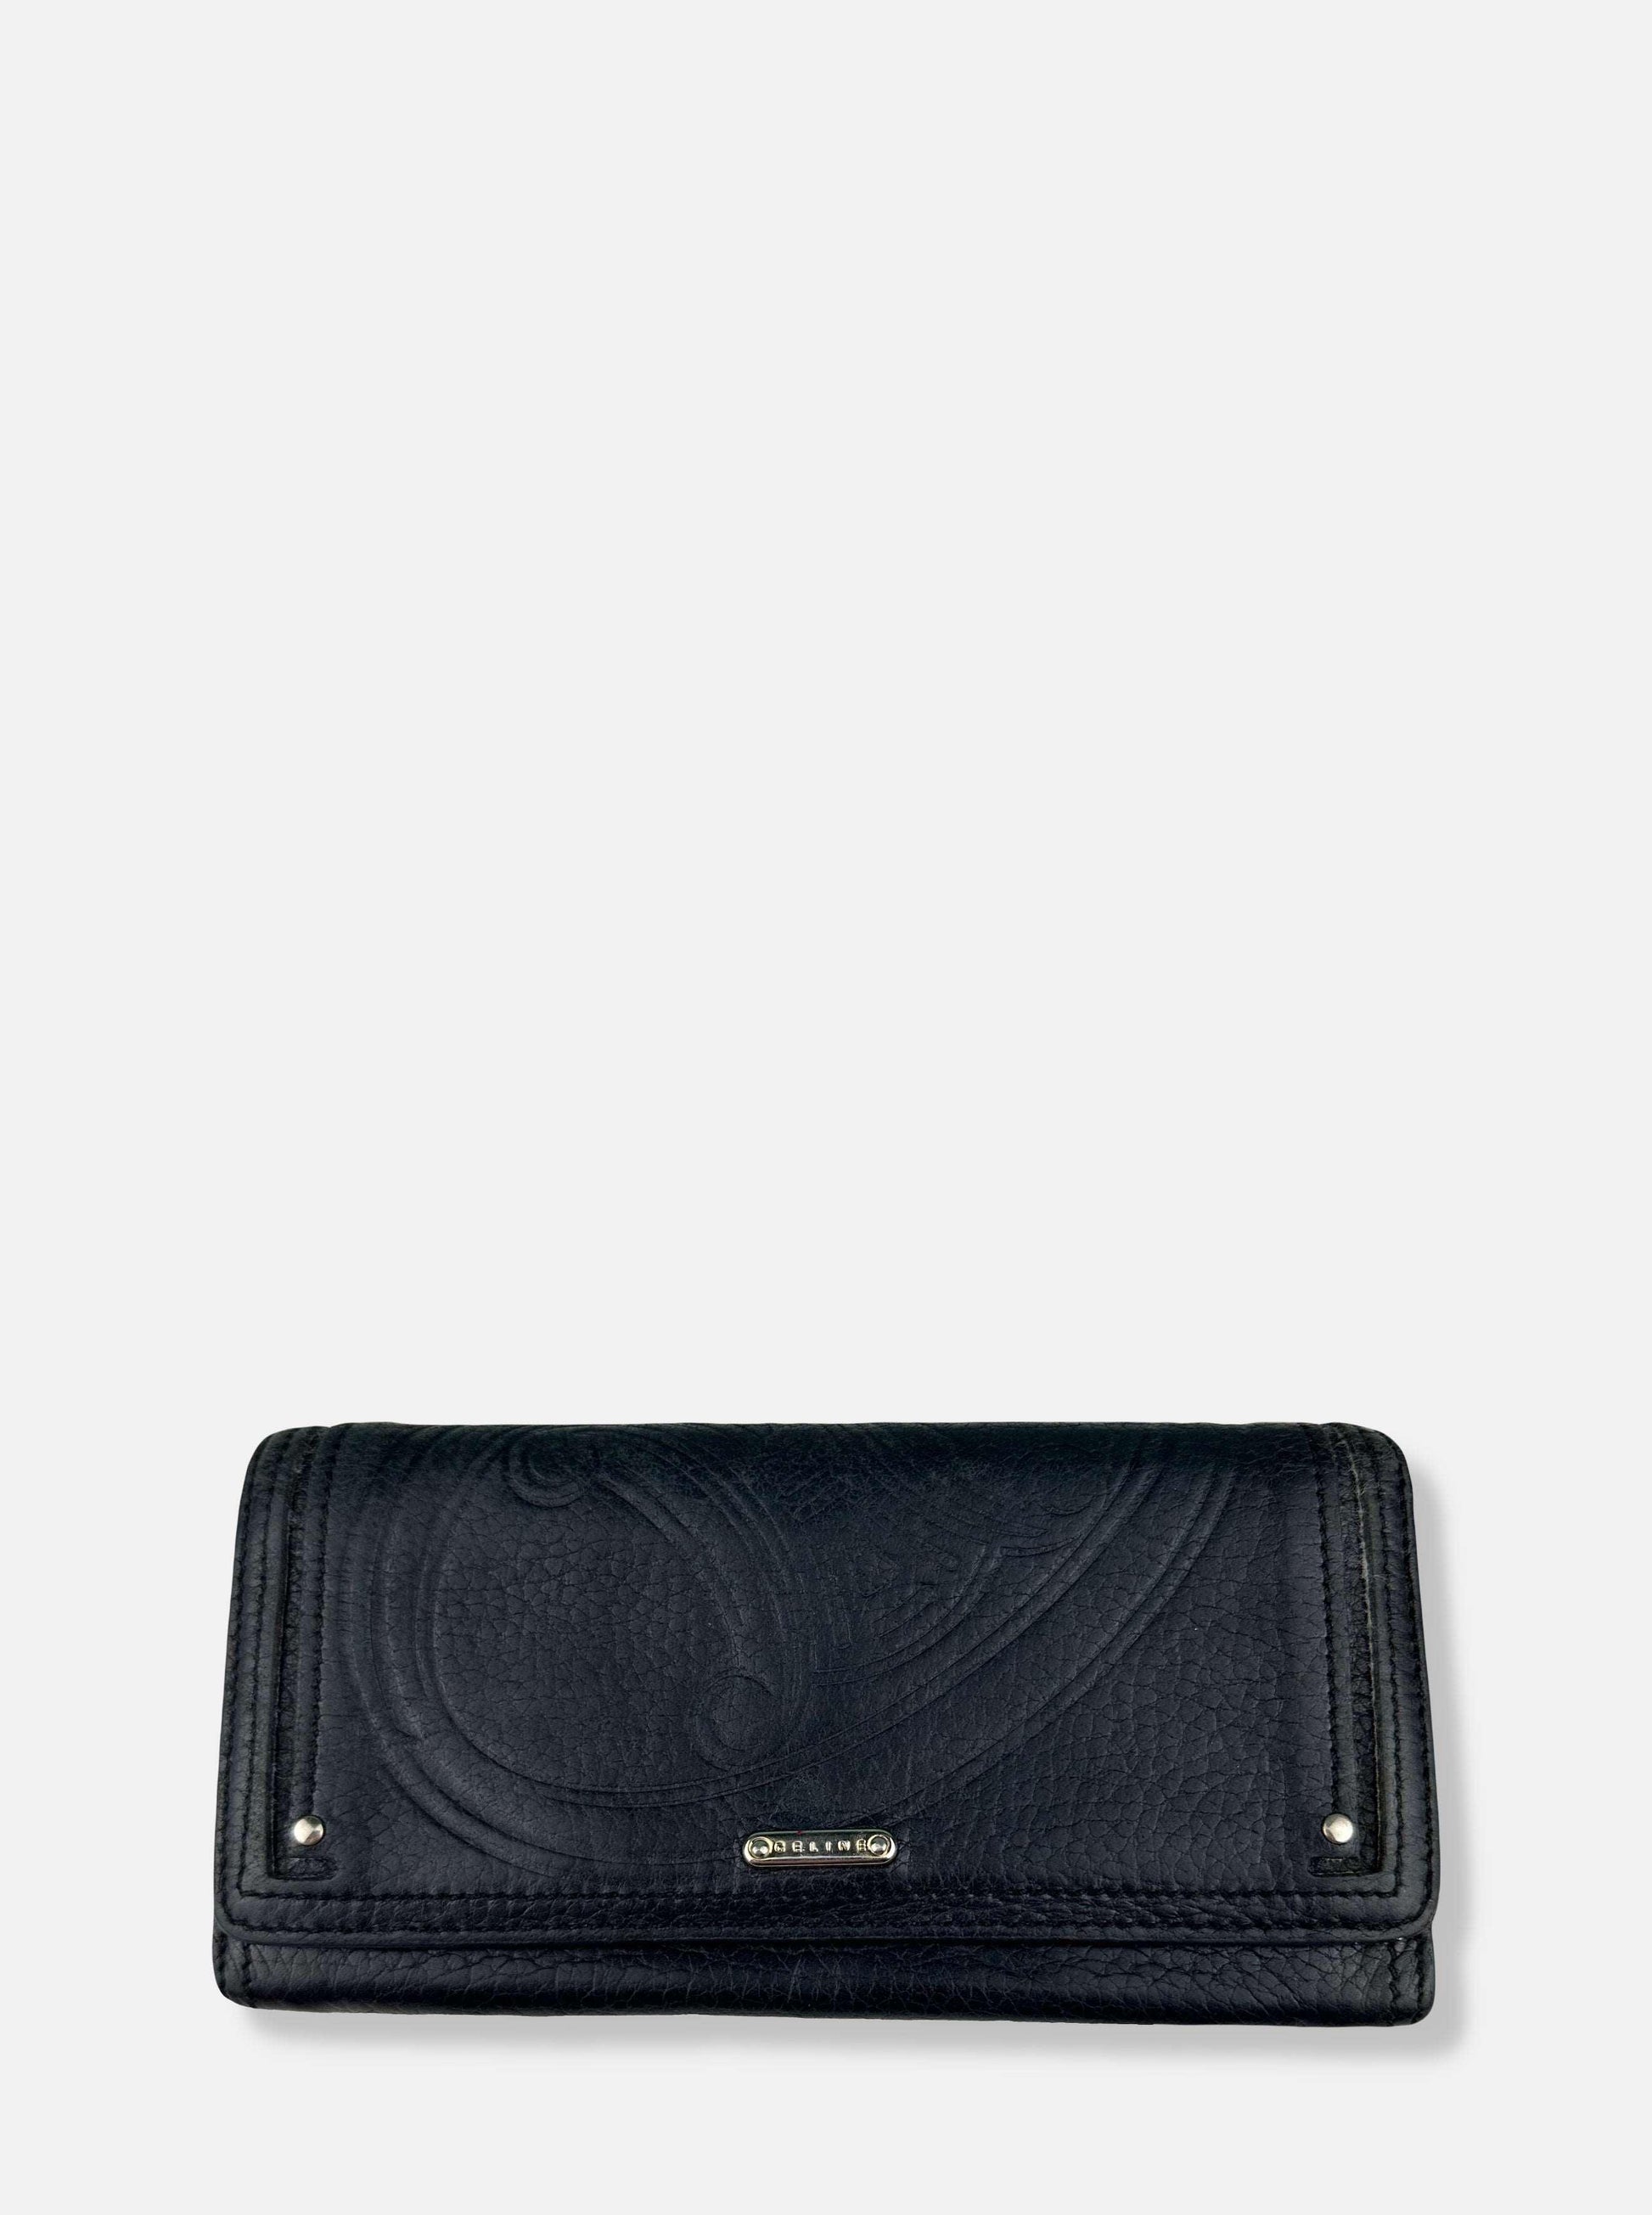 Black Leather Multi Compartment Purse Wallet